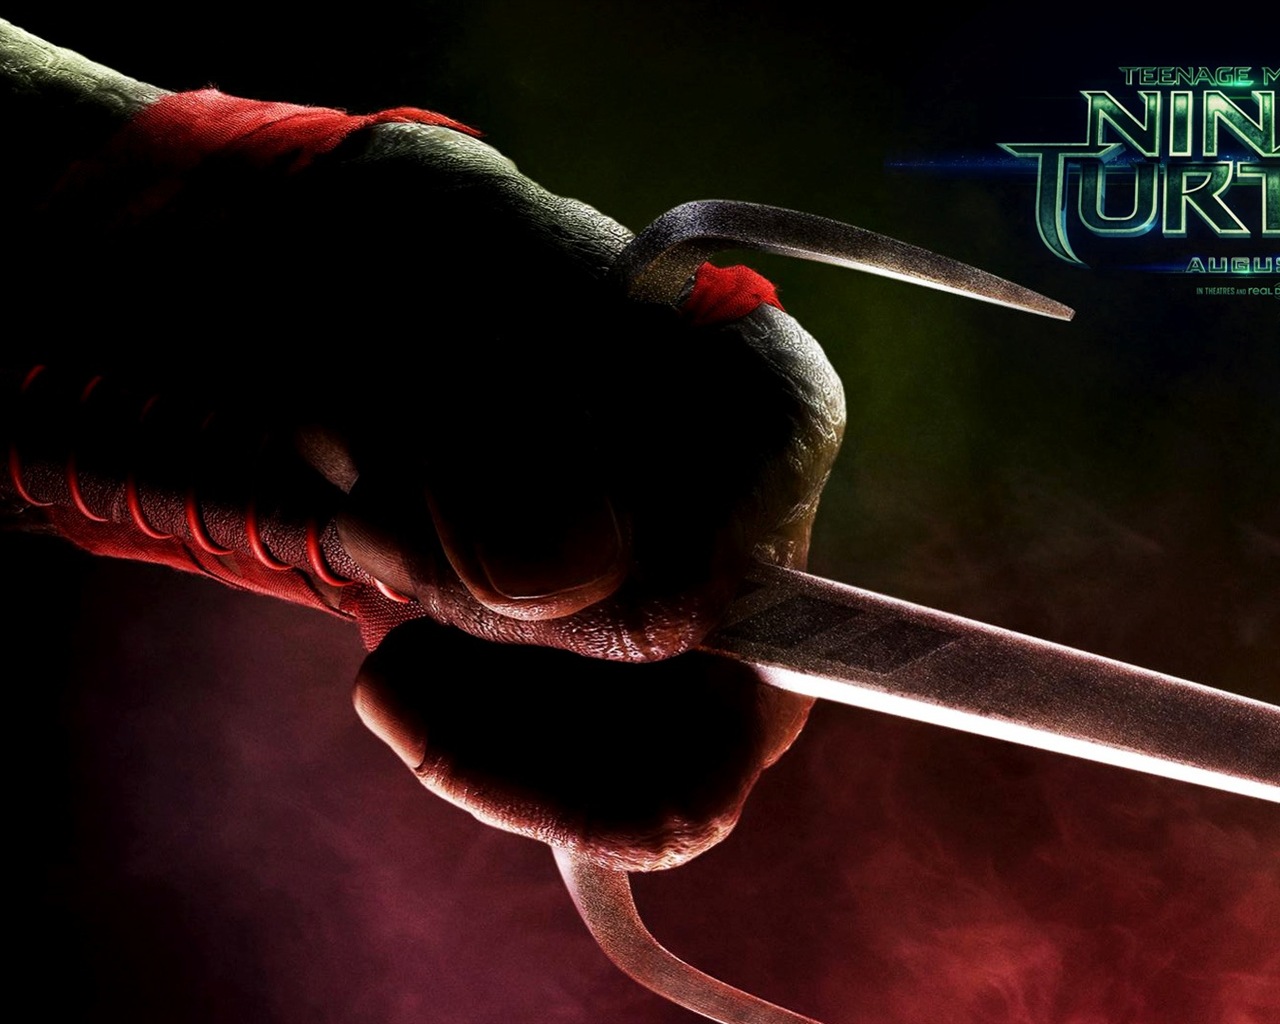 2014 Teenage Mutant Ninja Turtles HD movie wallpapers #5 - 1280x1024